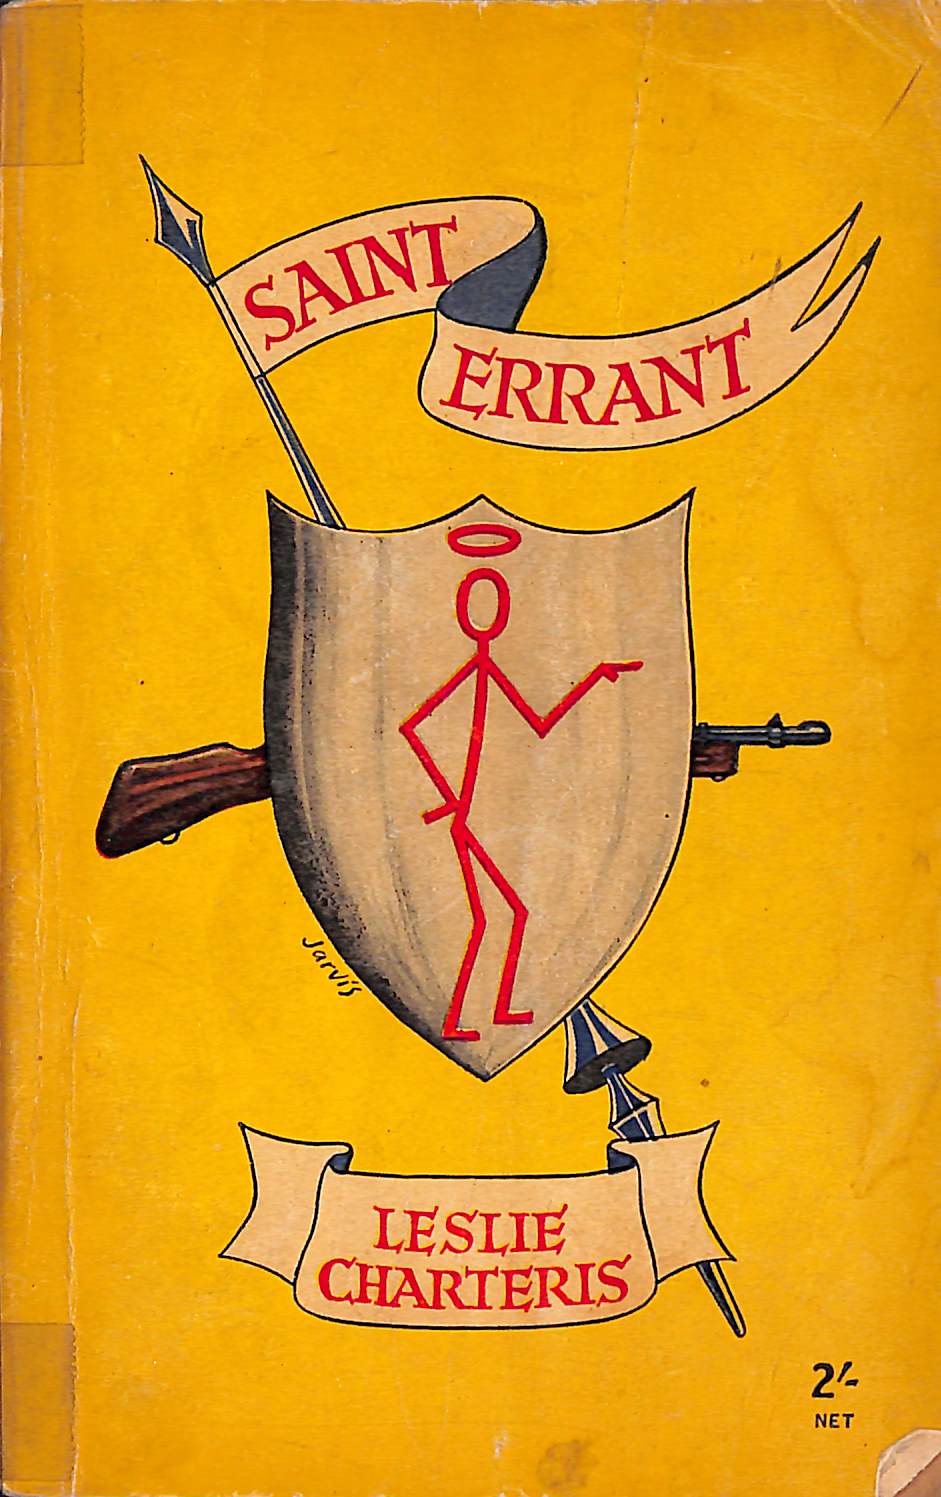 "Saint Errant" 1955 CHARTERIS, Leslie